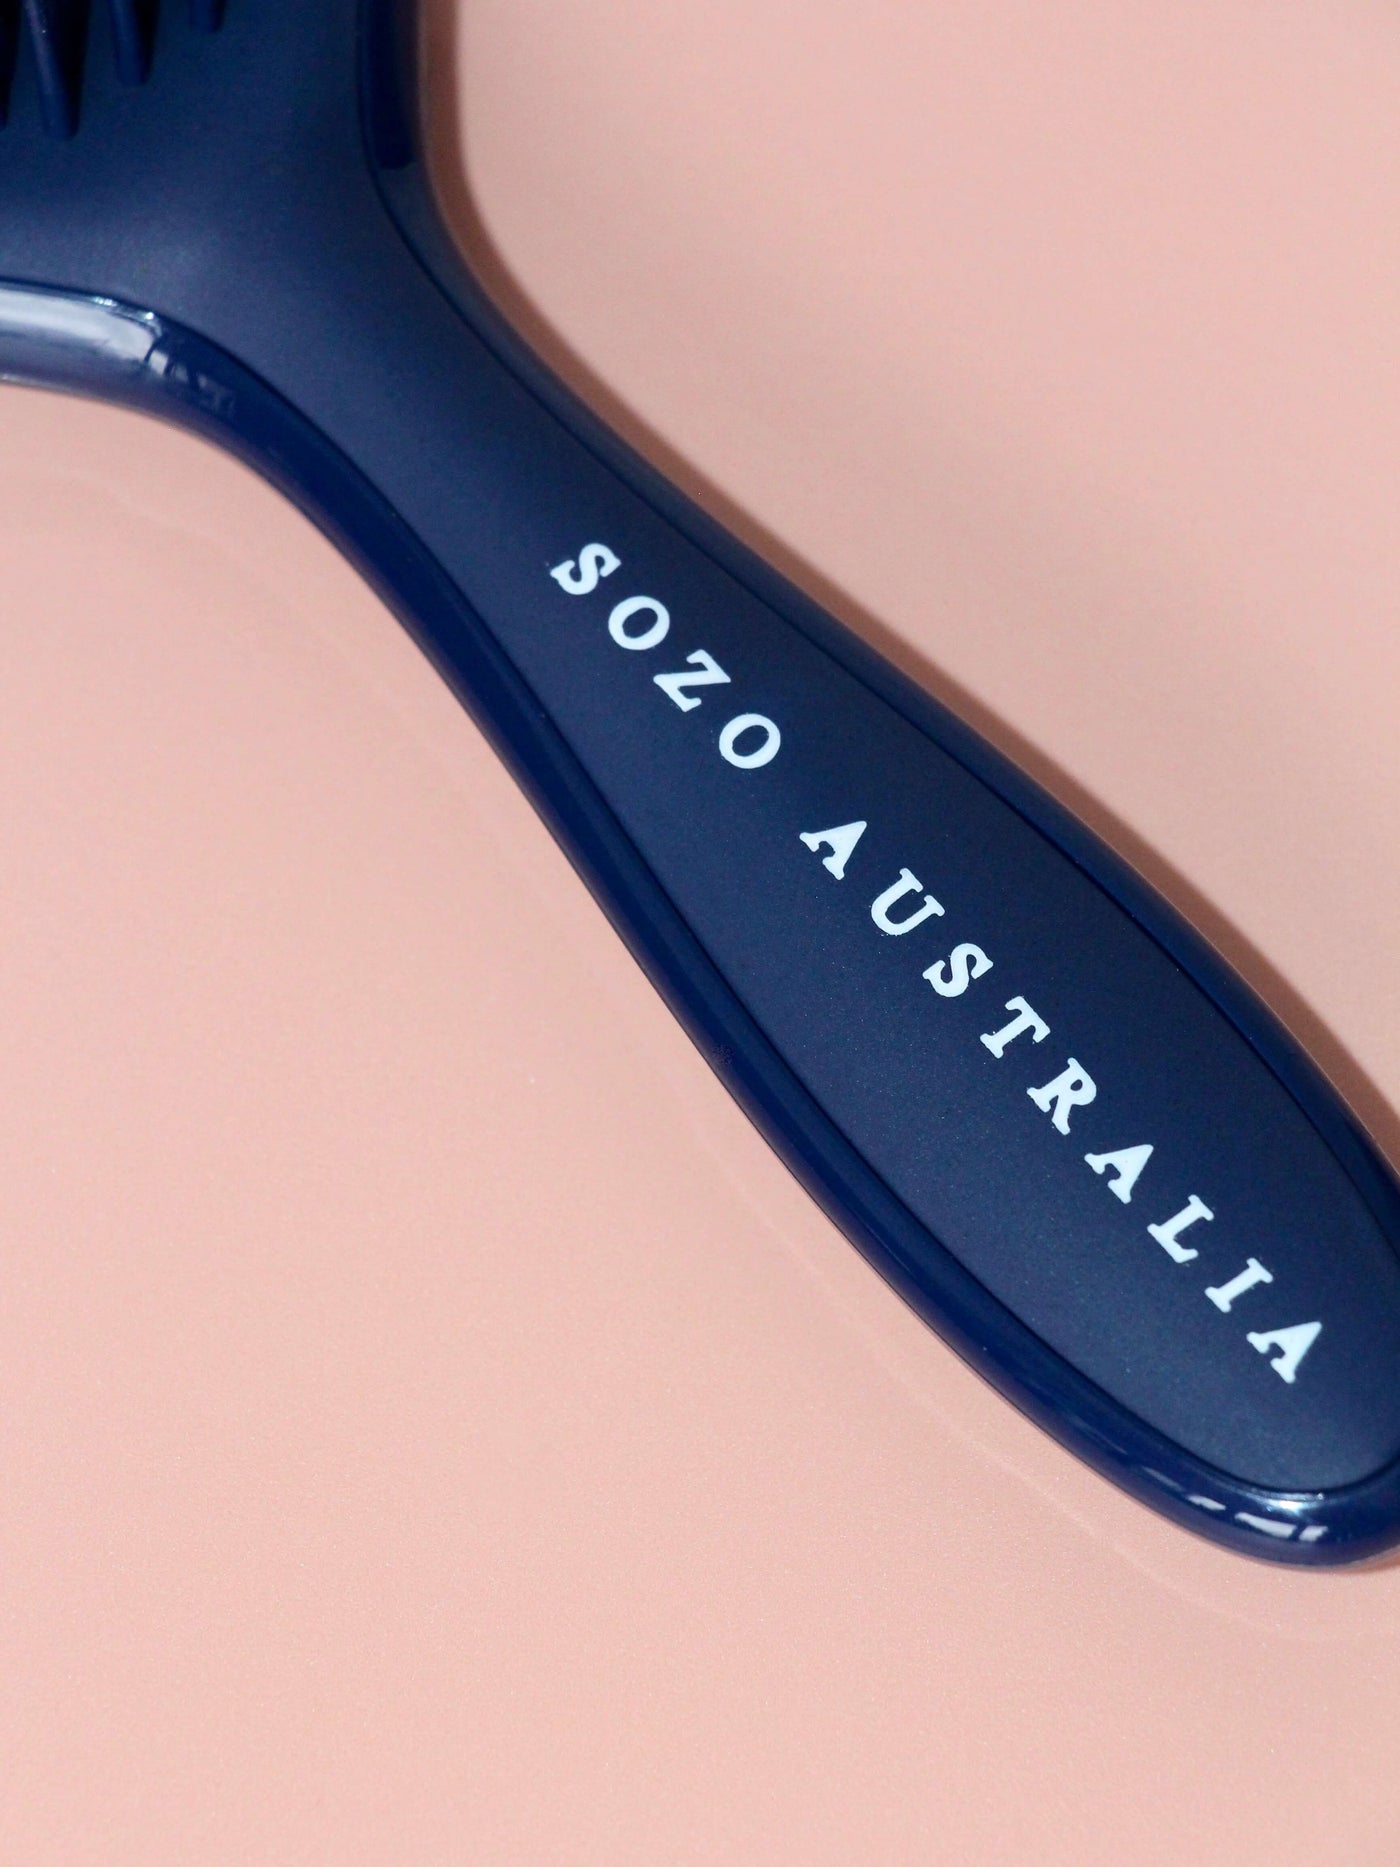 Handle of the Sozo Australia Detangling Hairbrush